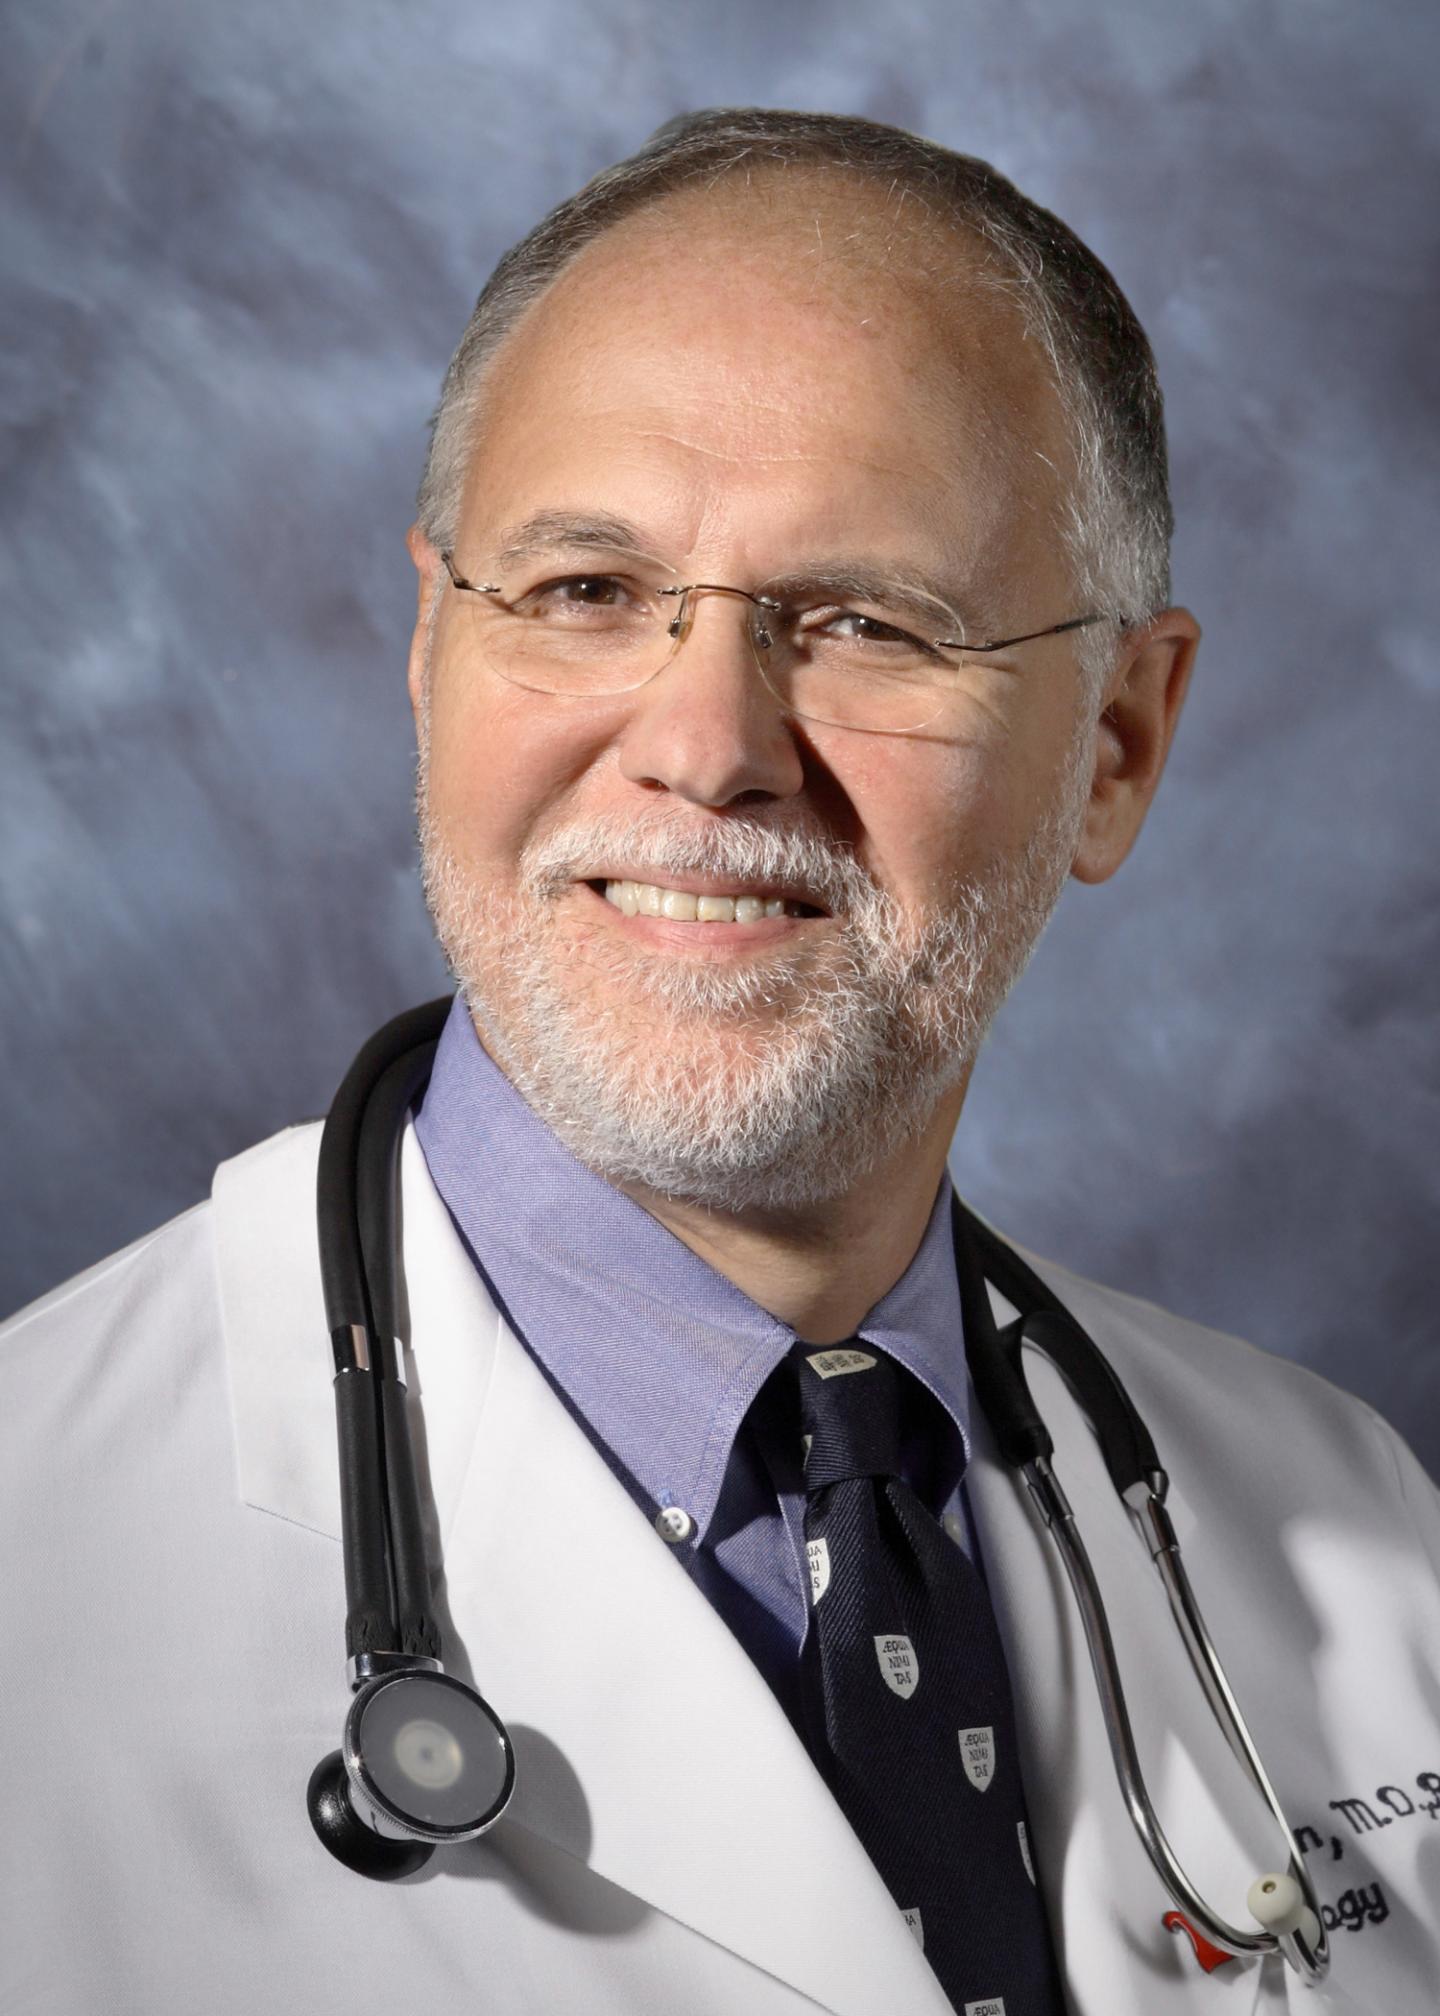 Eduardo Marbán, MD, PhD, Cedars-Sinai Medical Center 